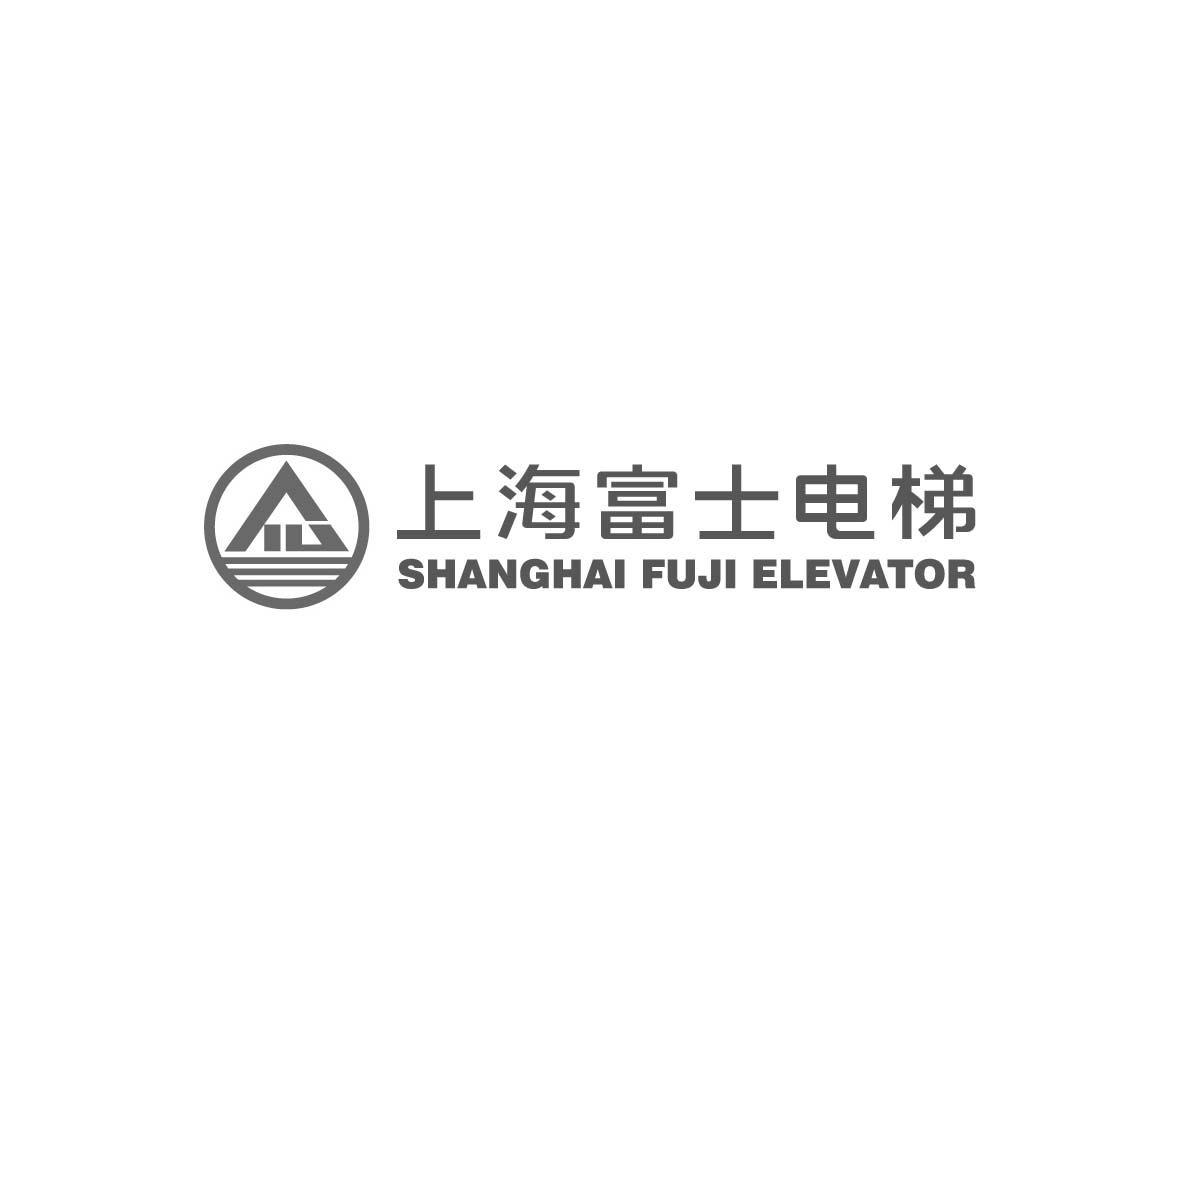 上海富士电梯 shanghai fuji elevator 商标公告